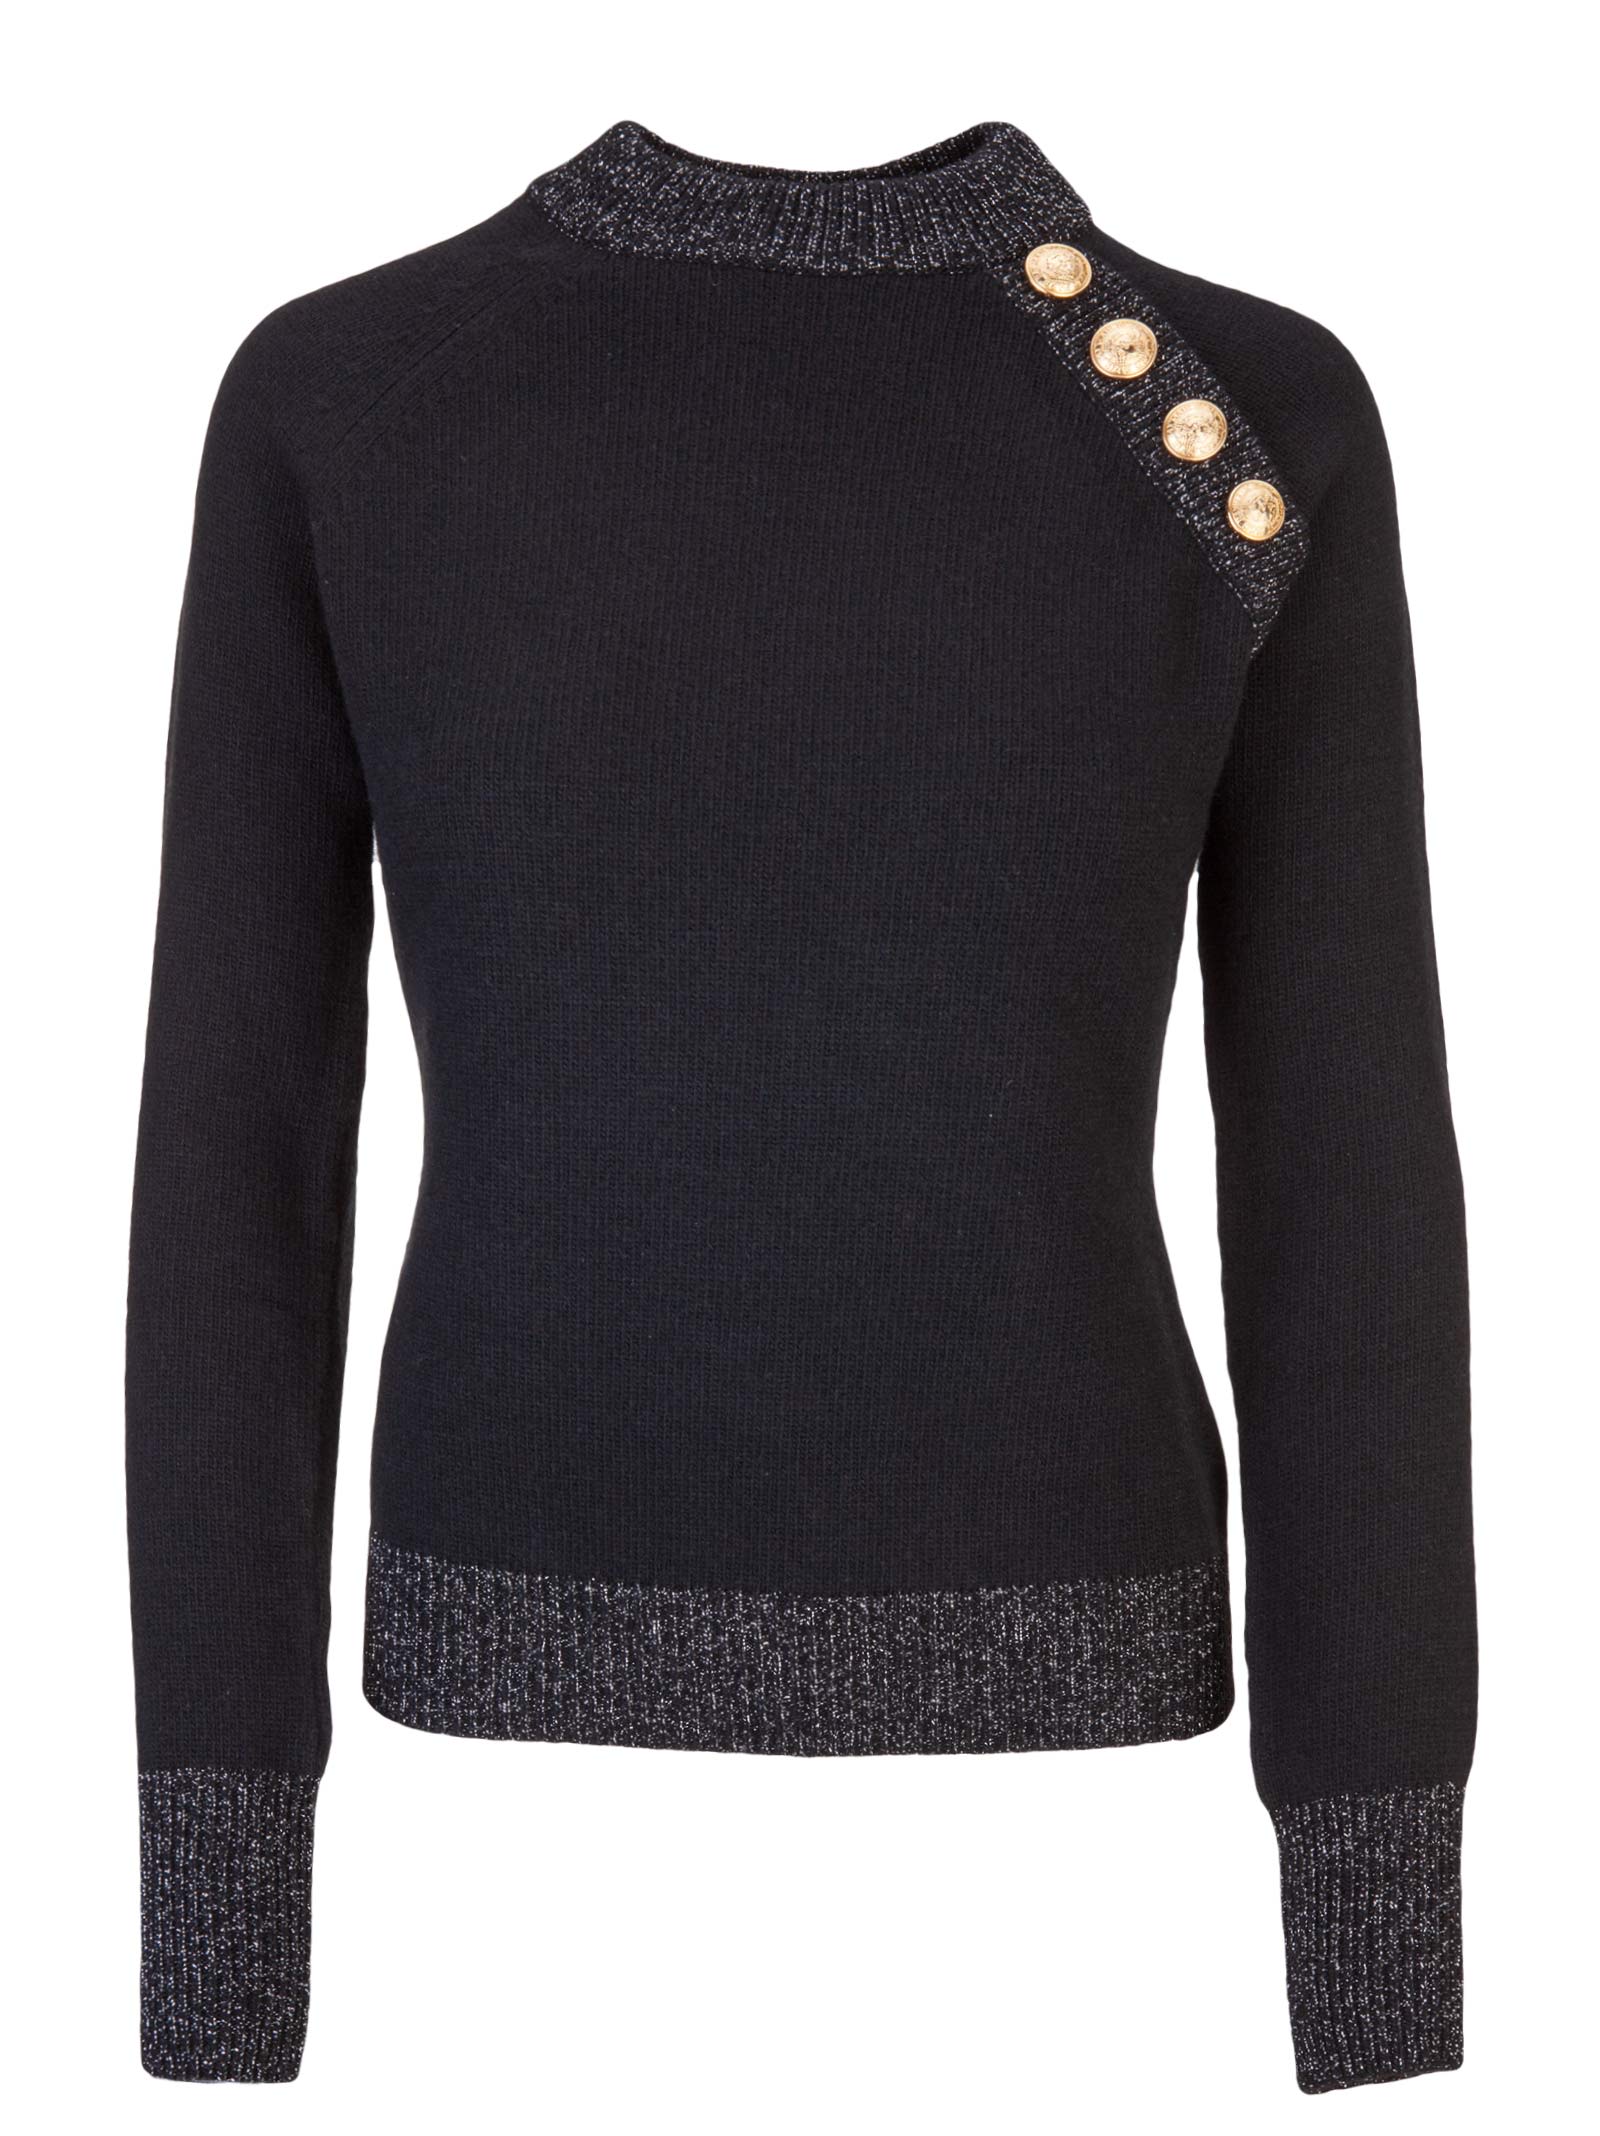 italist | Best price in the market for Balmain Balmain Paris Sweater ...